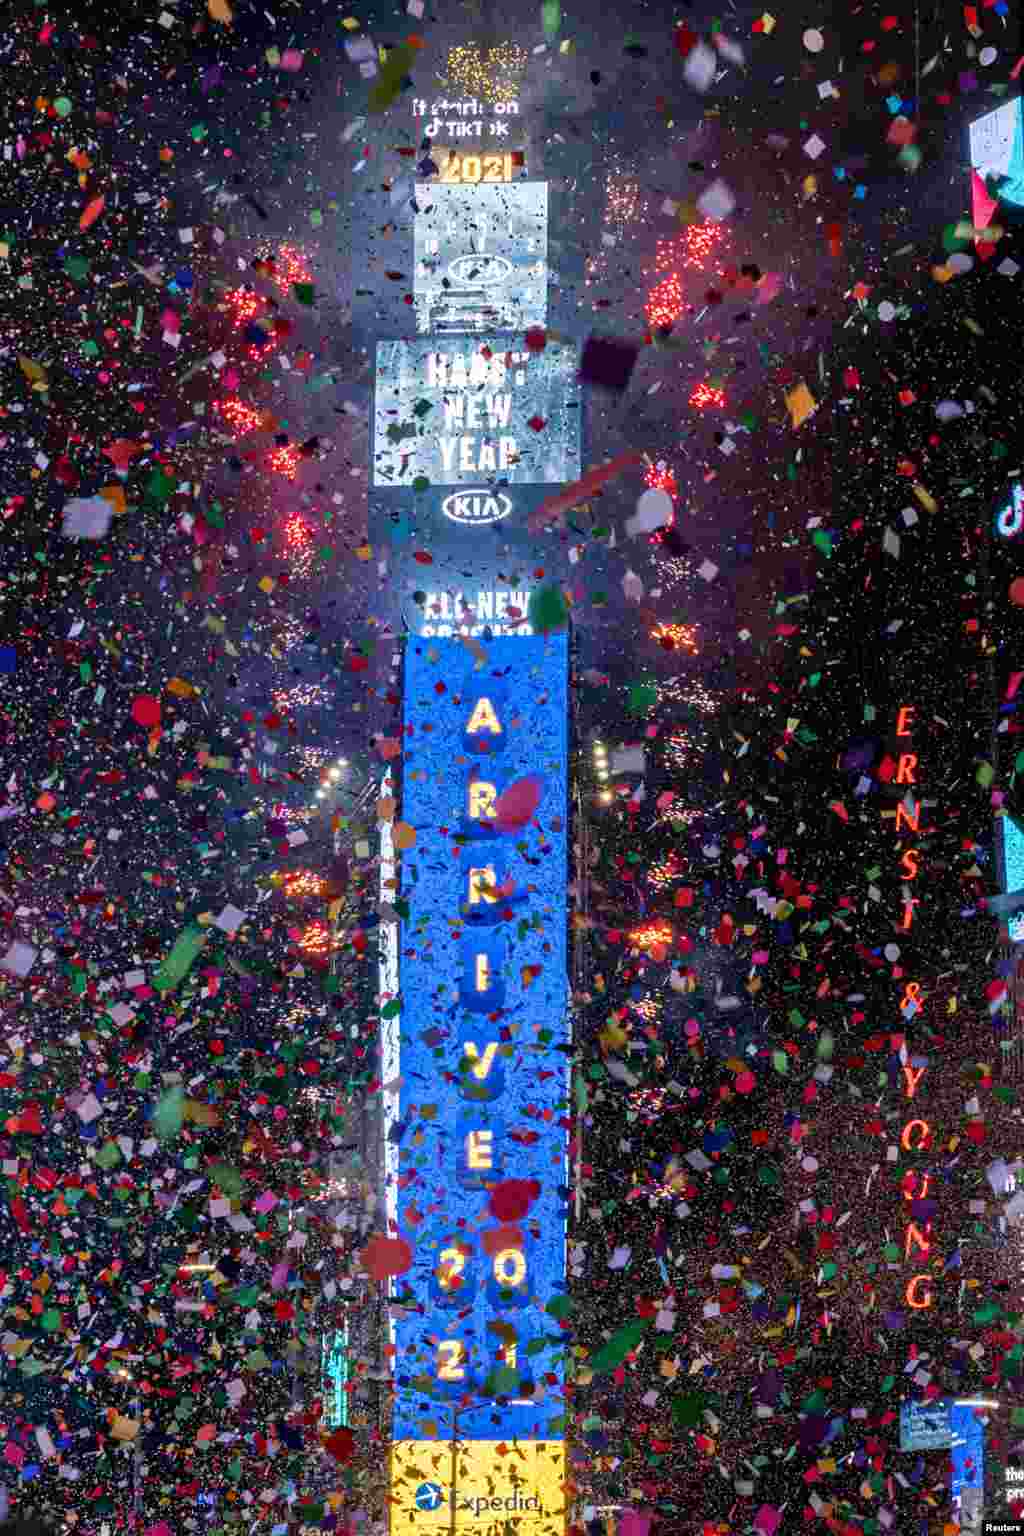 New York မြို့က Time Square မှာ နှစ်သစ်ကို ဆင်နွဲှကြတဲ့ မြင်ကွင်း။